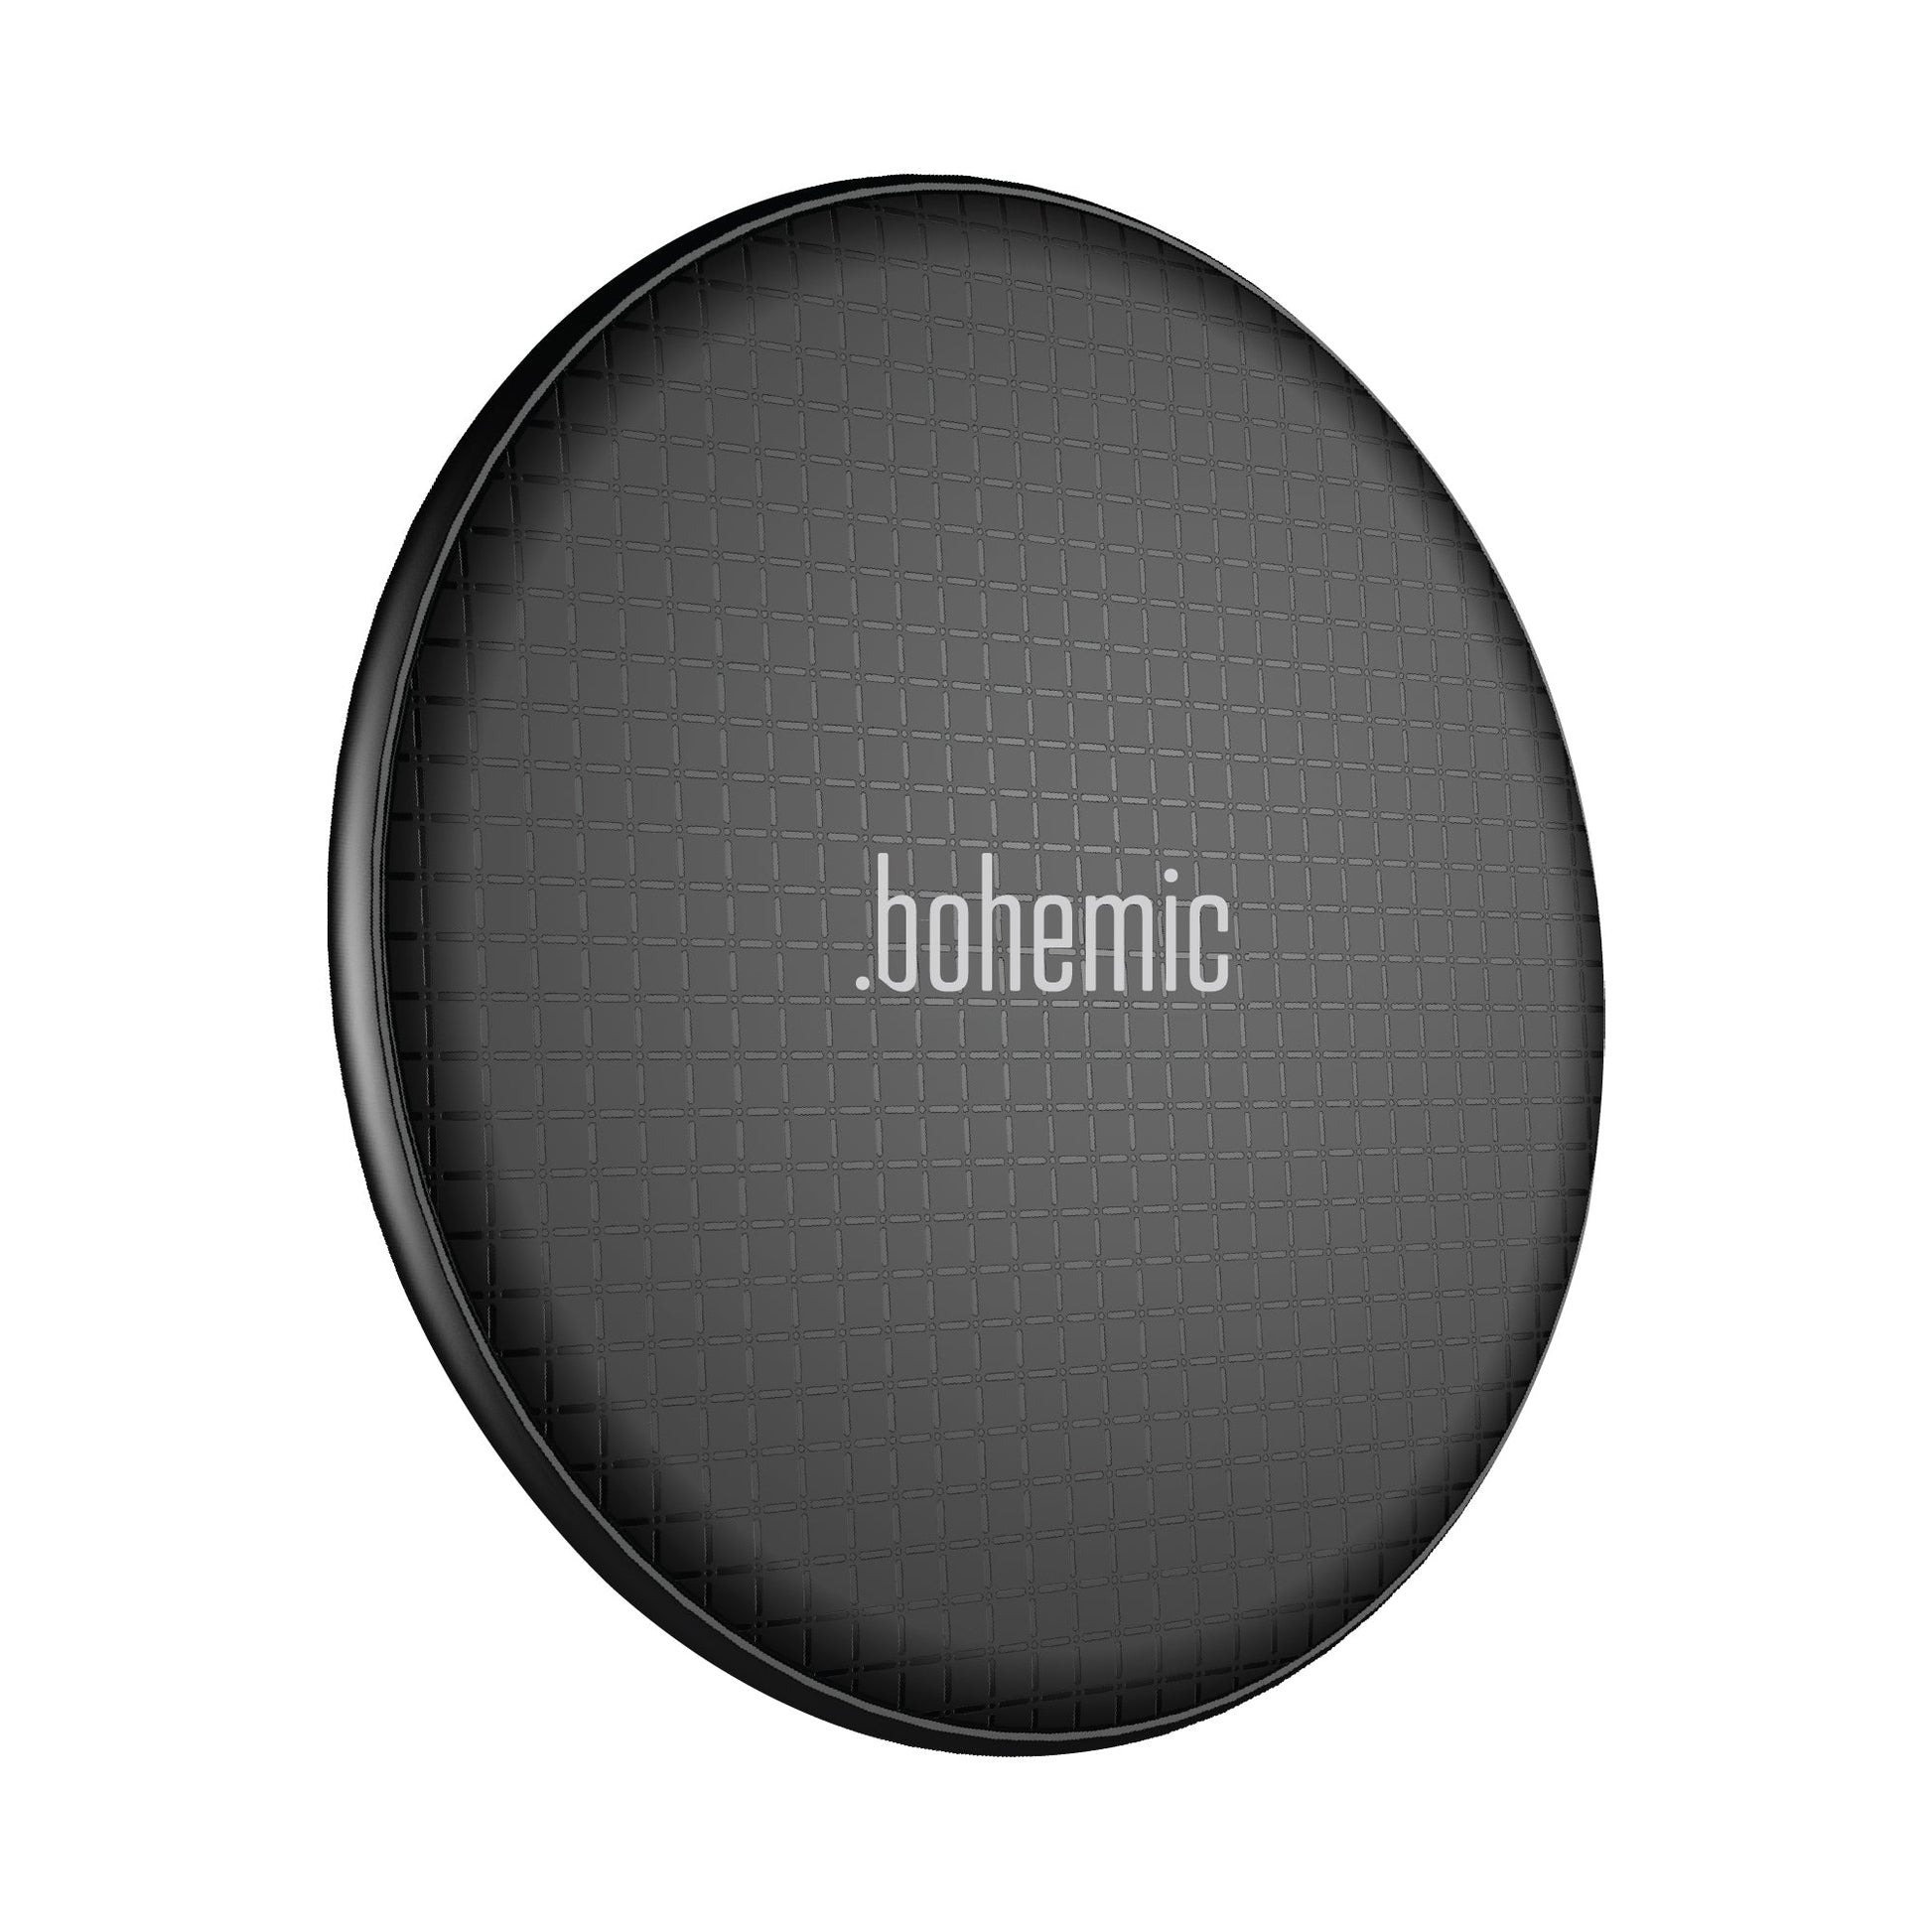 Bohemic BOH7276: draadloos oplaadstation smartphones Android en I-Phone - Bivakshop